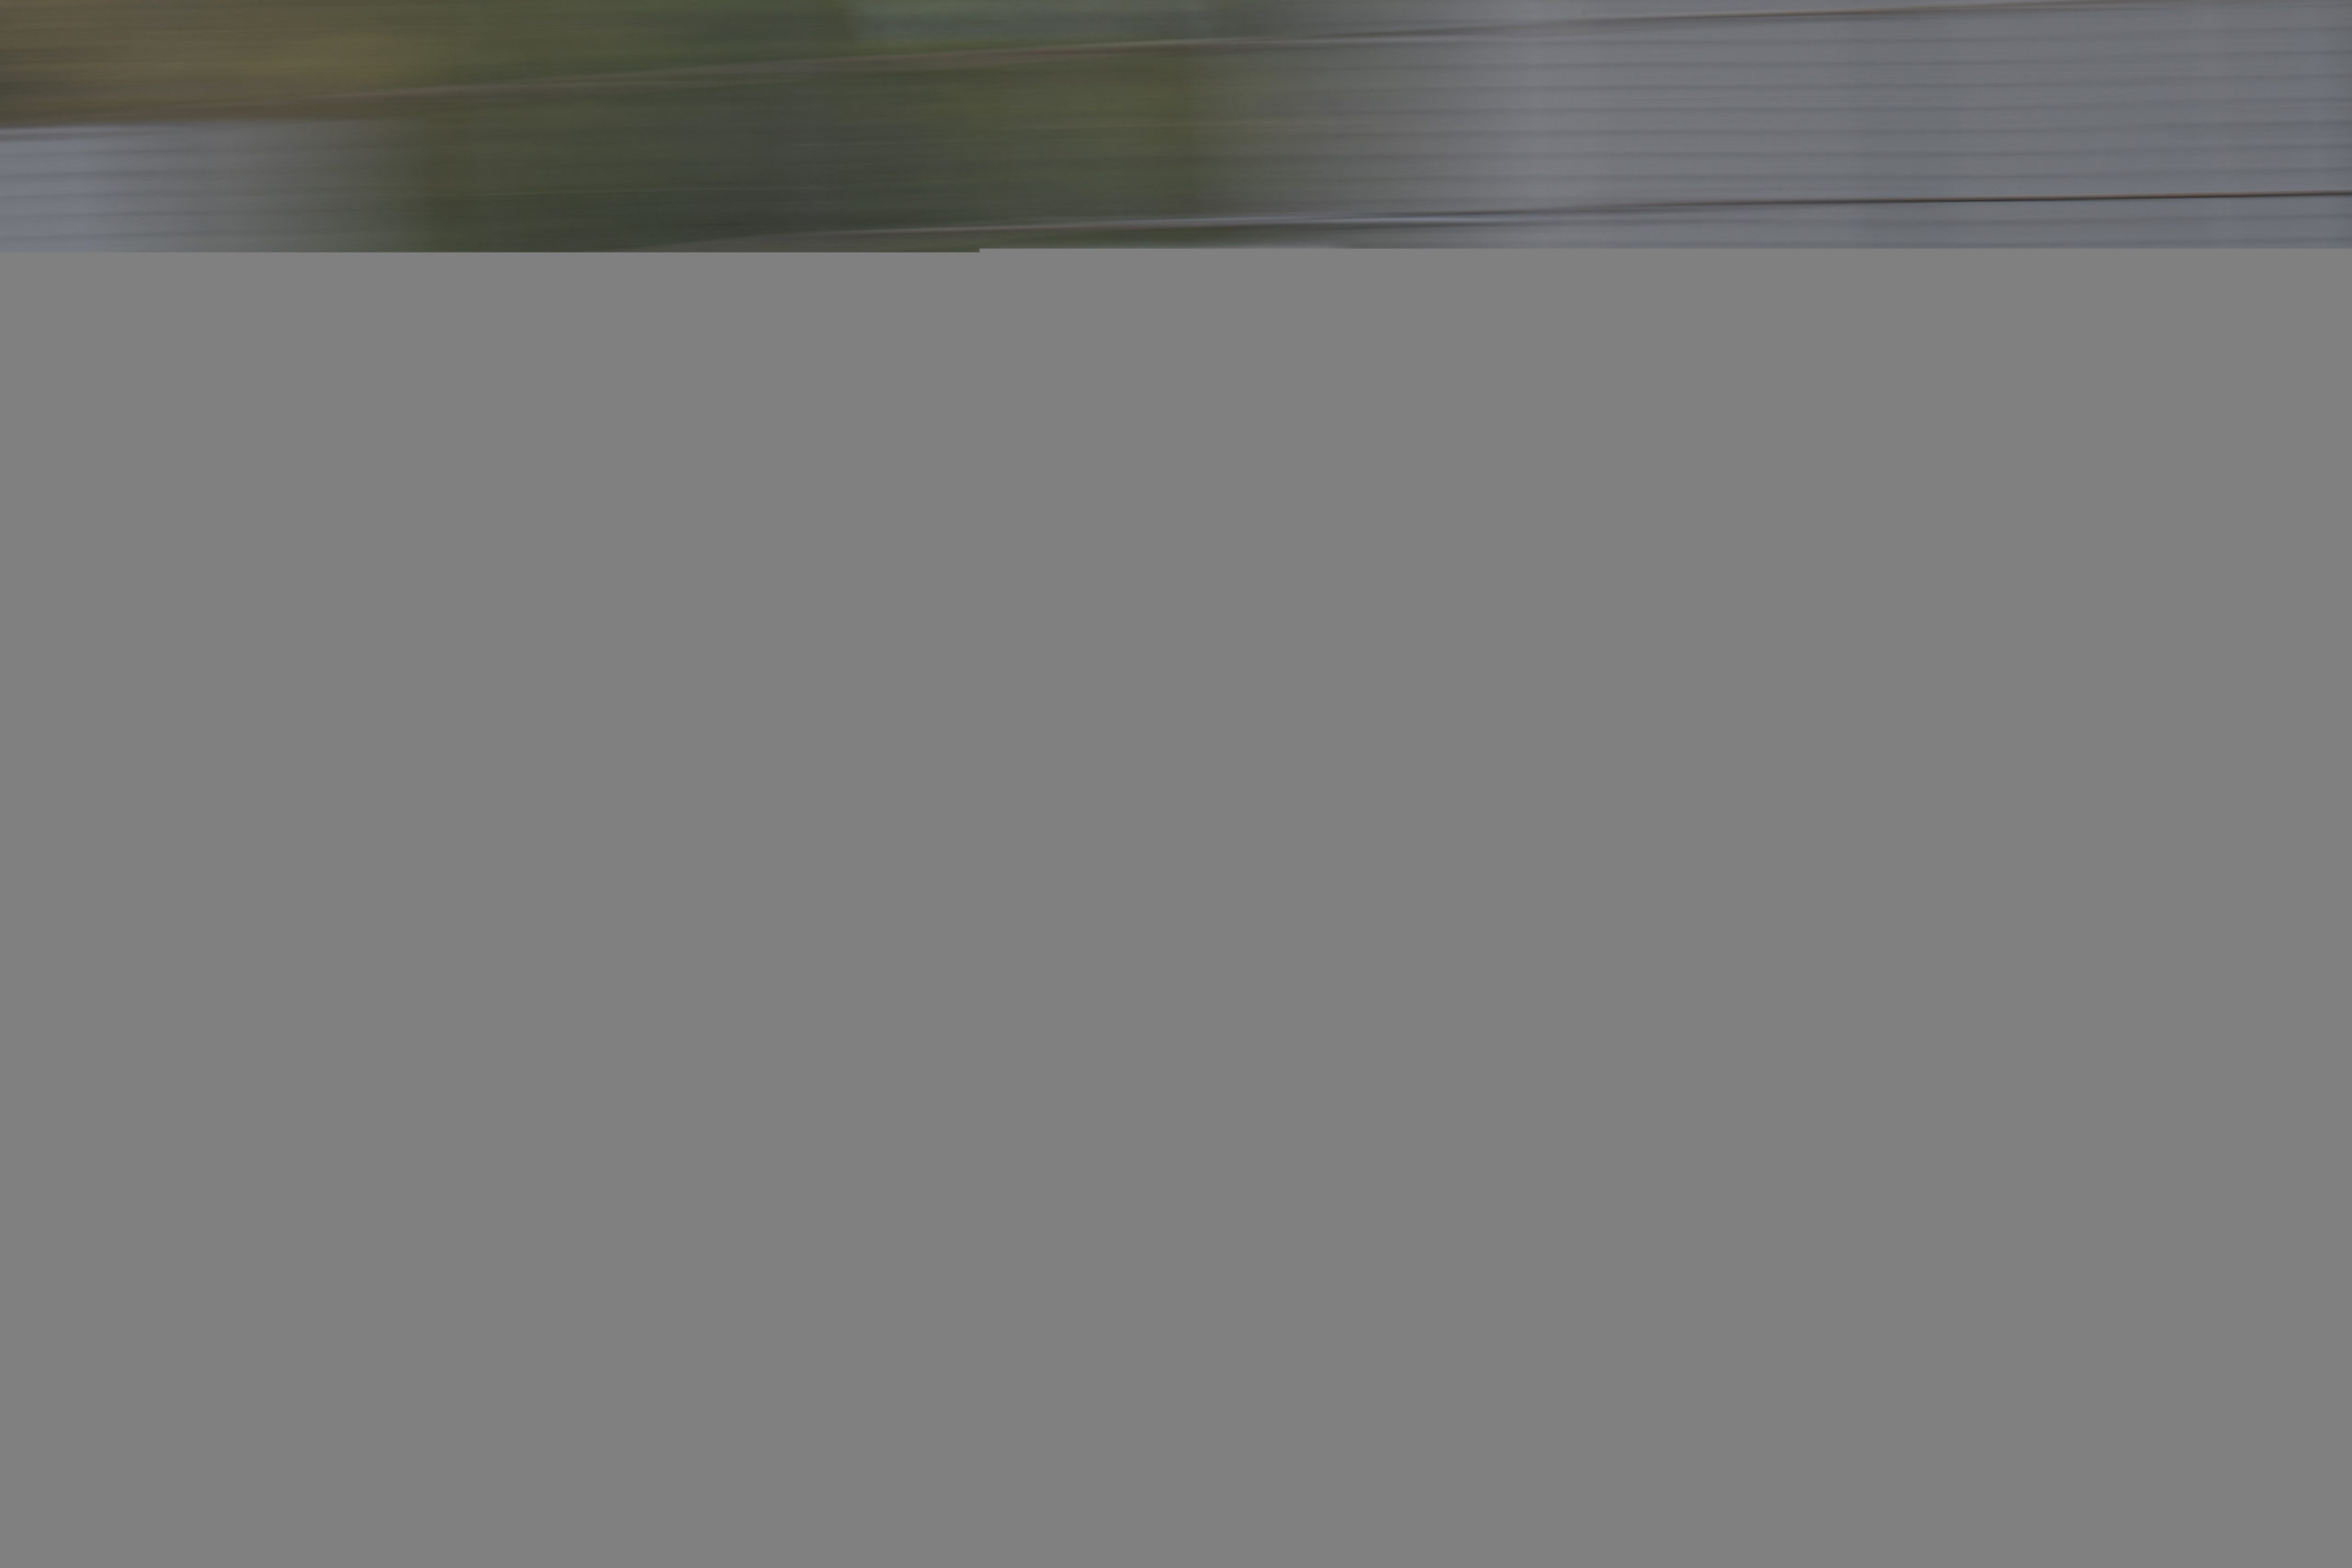 ex-f1 driver kvyat eyeing formula e switch, gets test debut